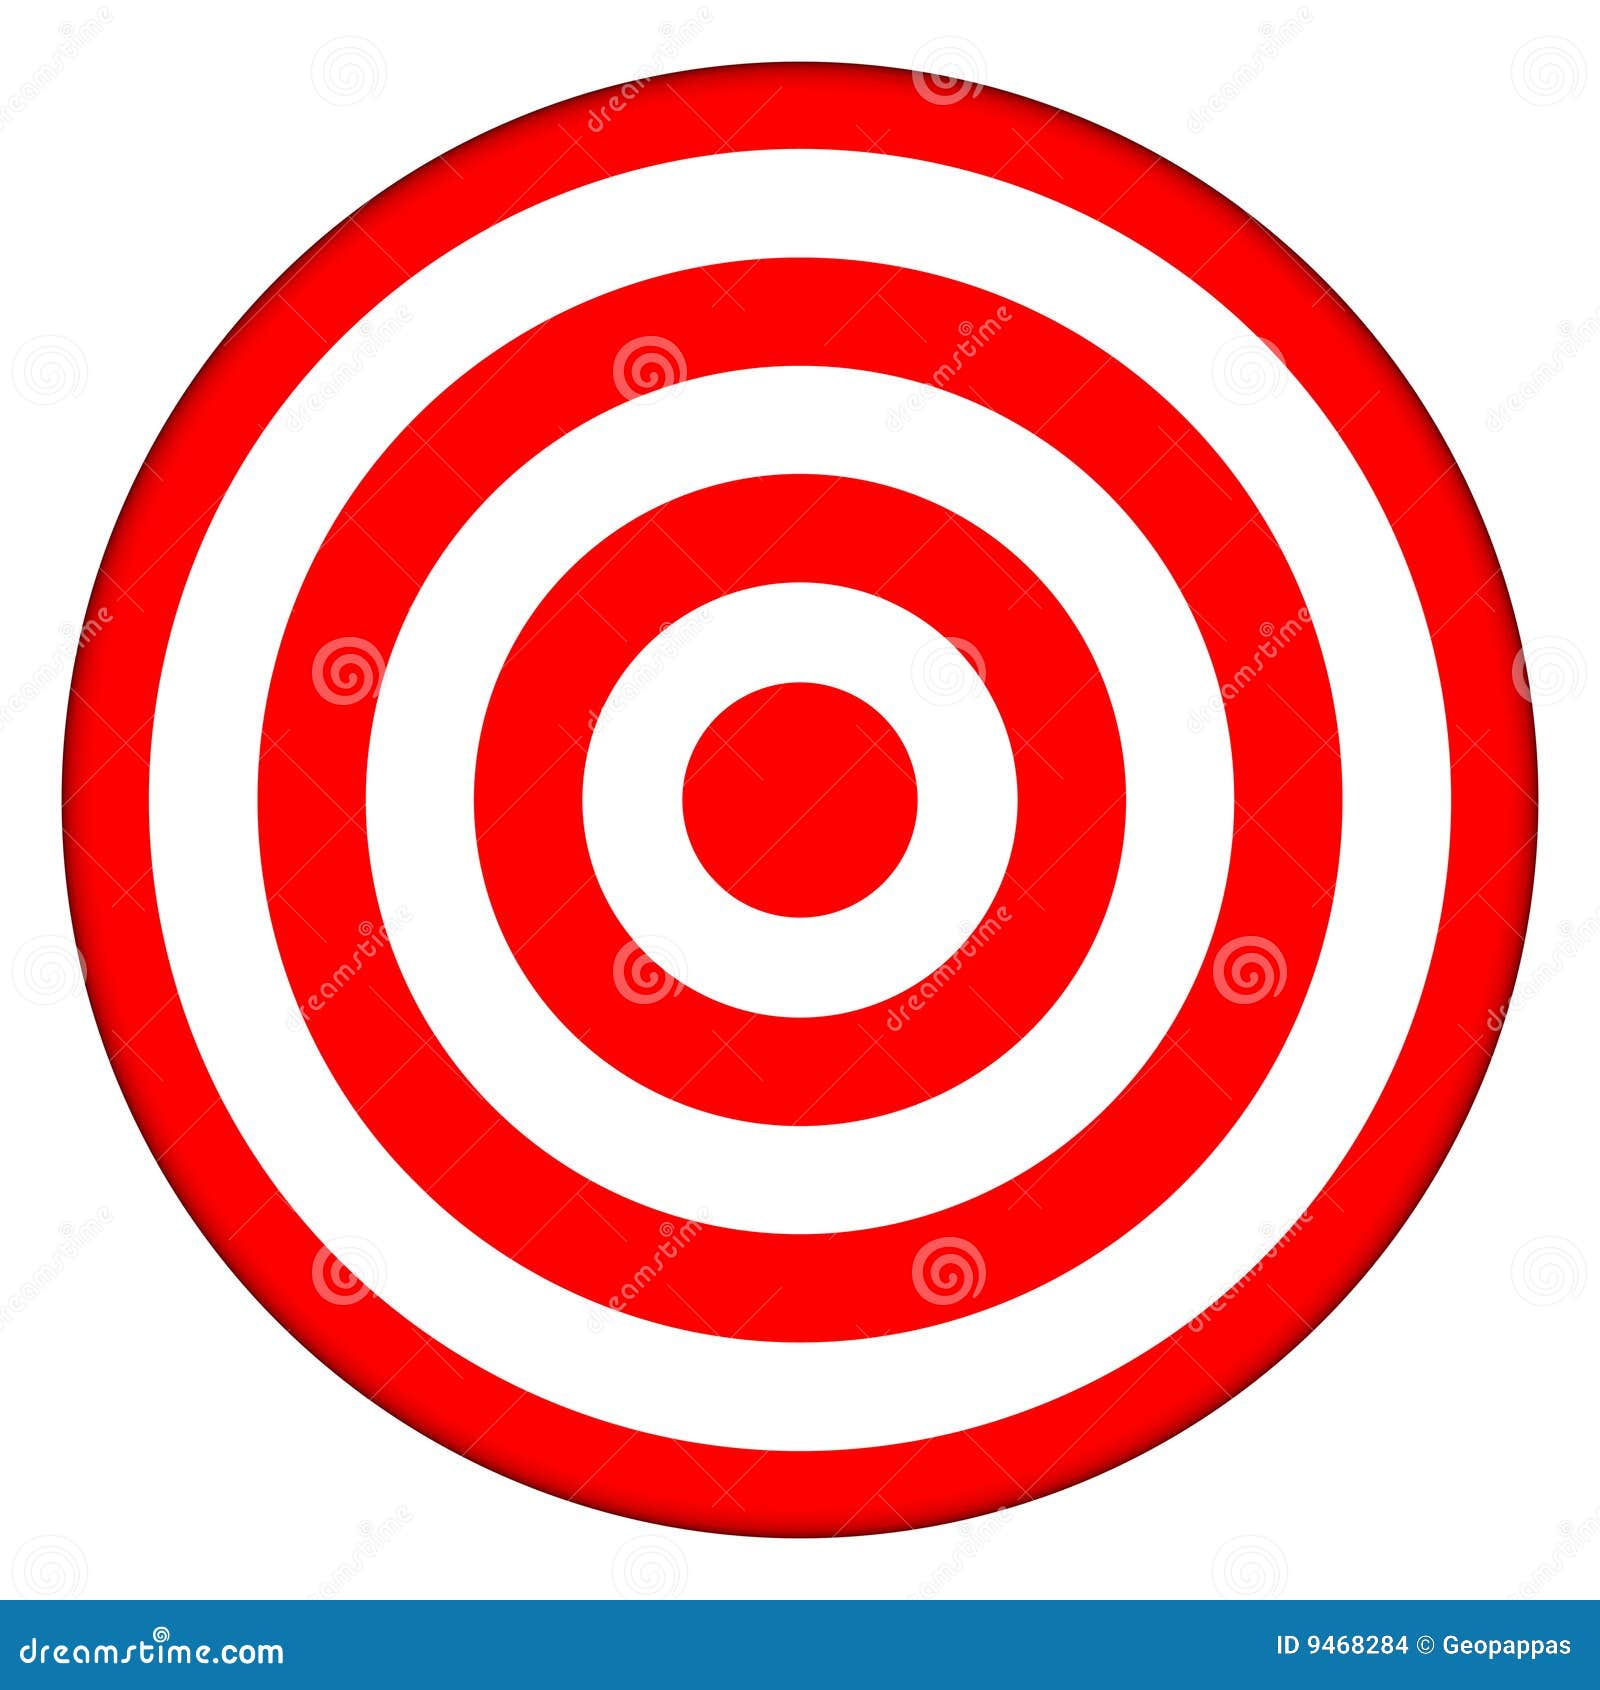 Bullseye Target Stock Images - Image: 9468284